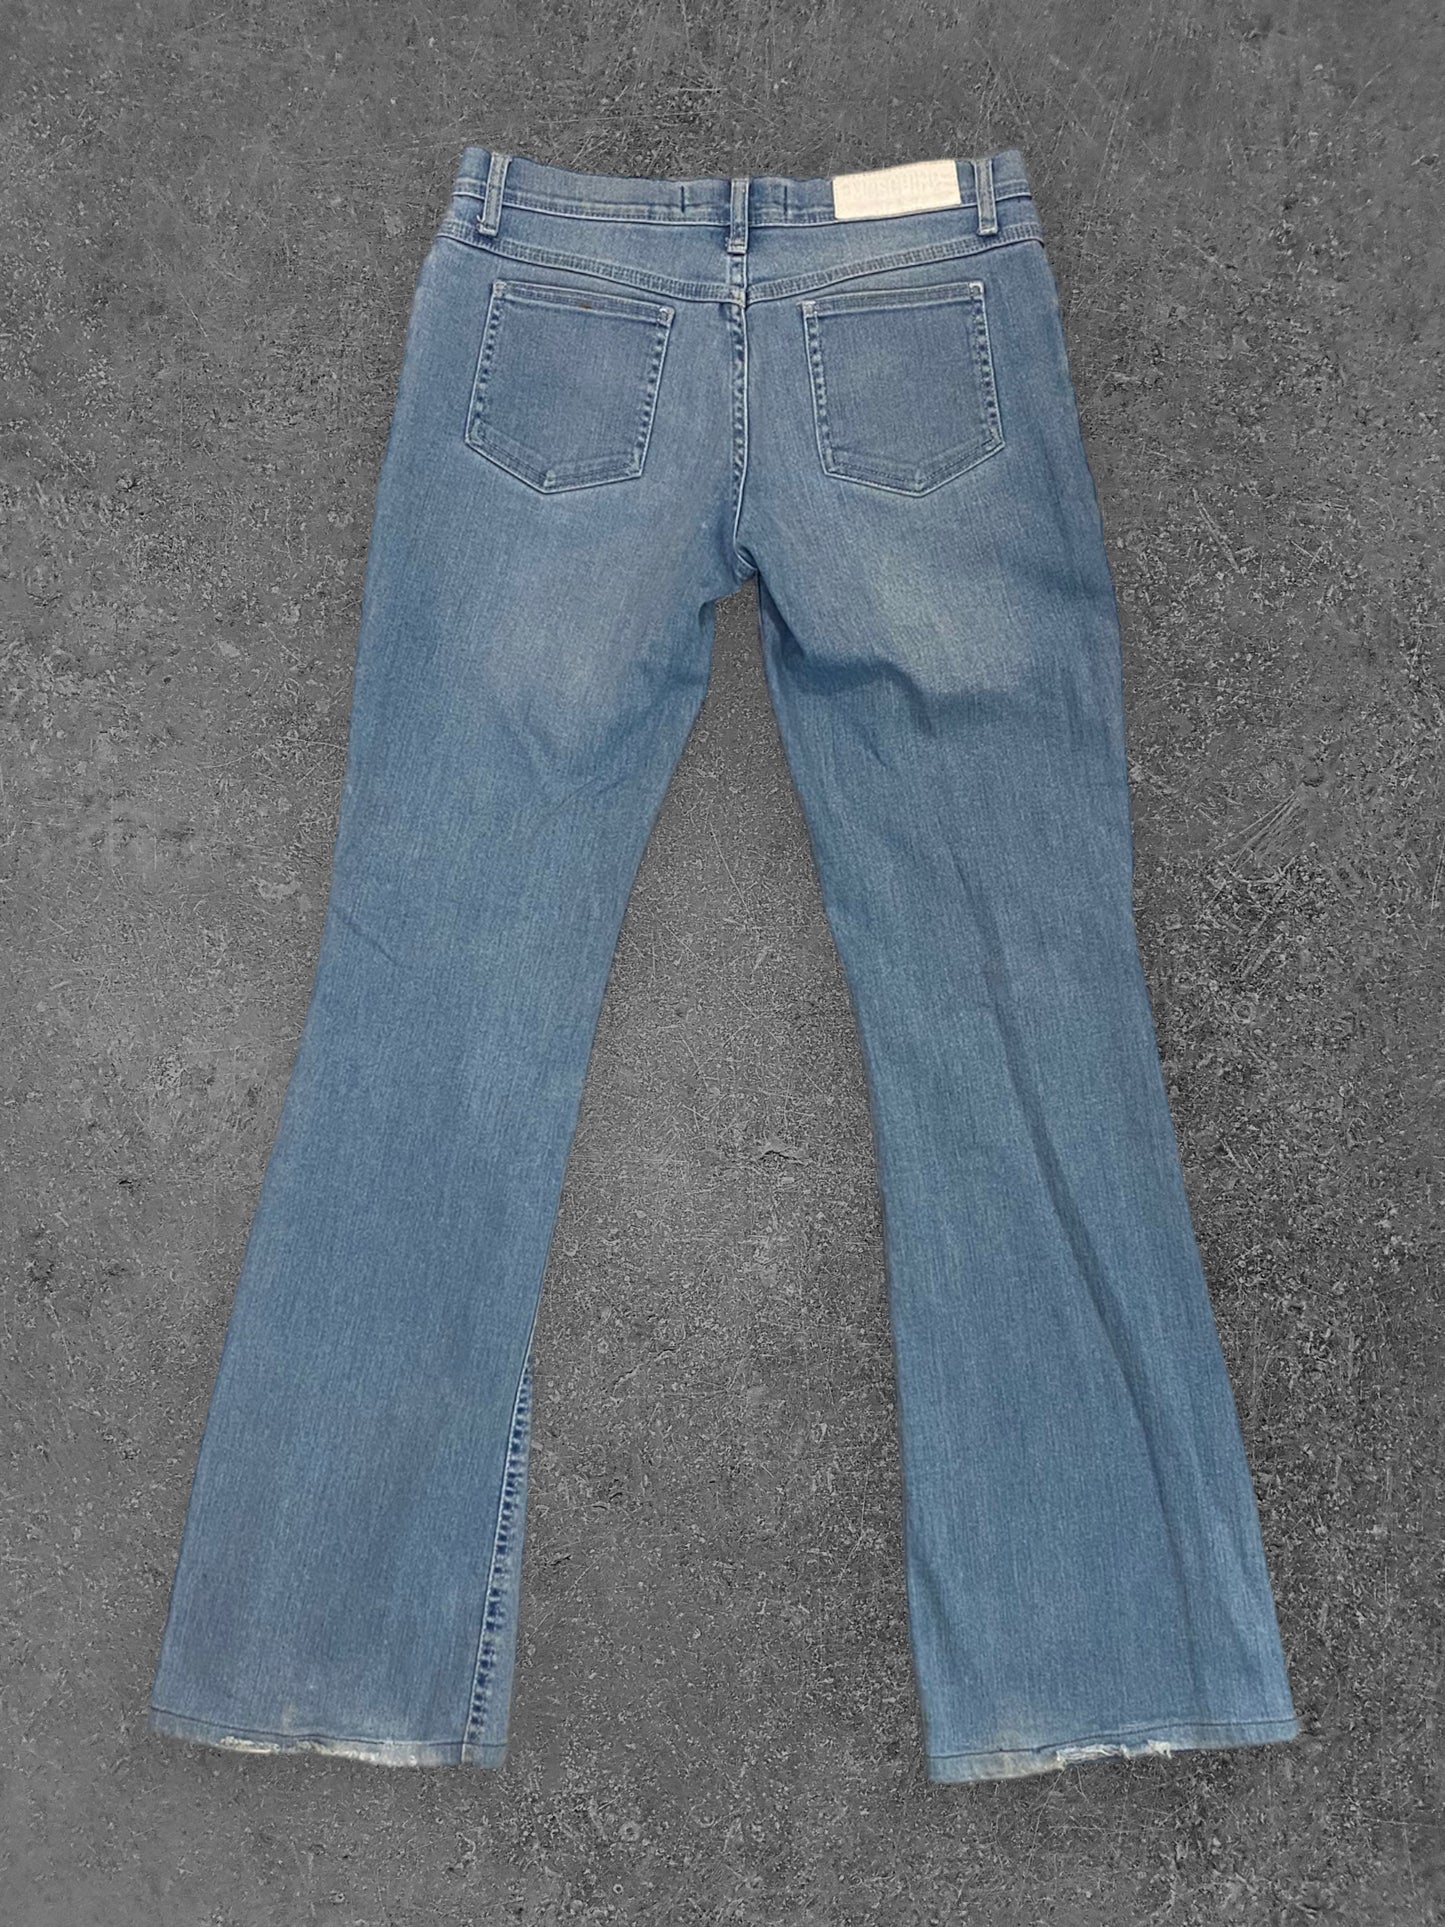 Moschino Jeans (W30, L30)